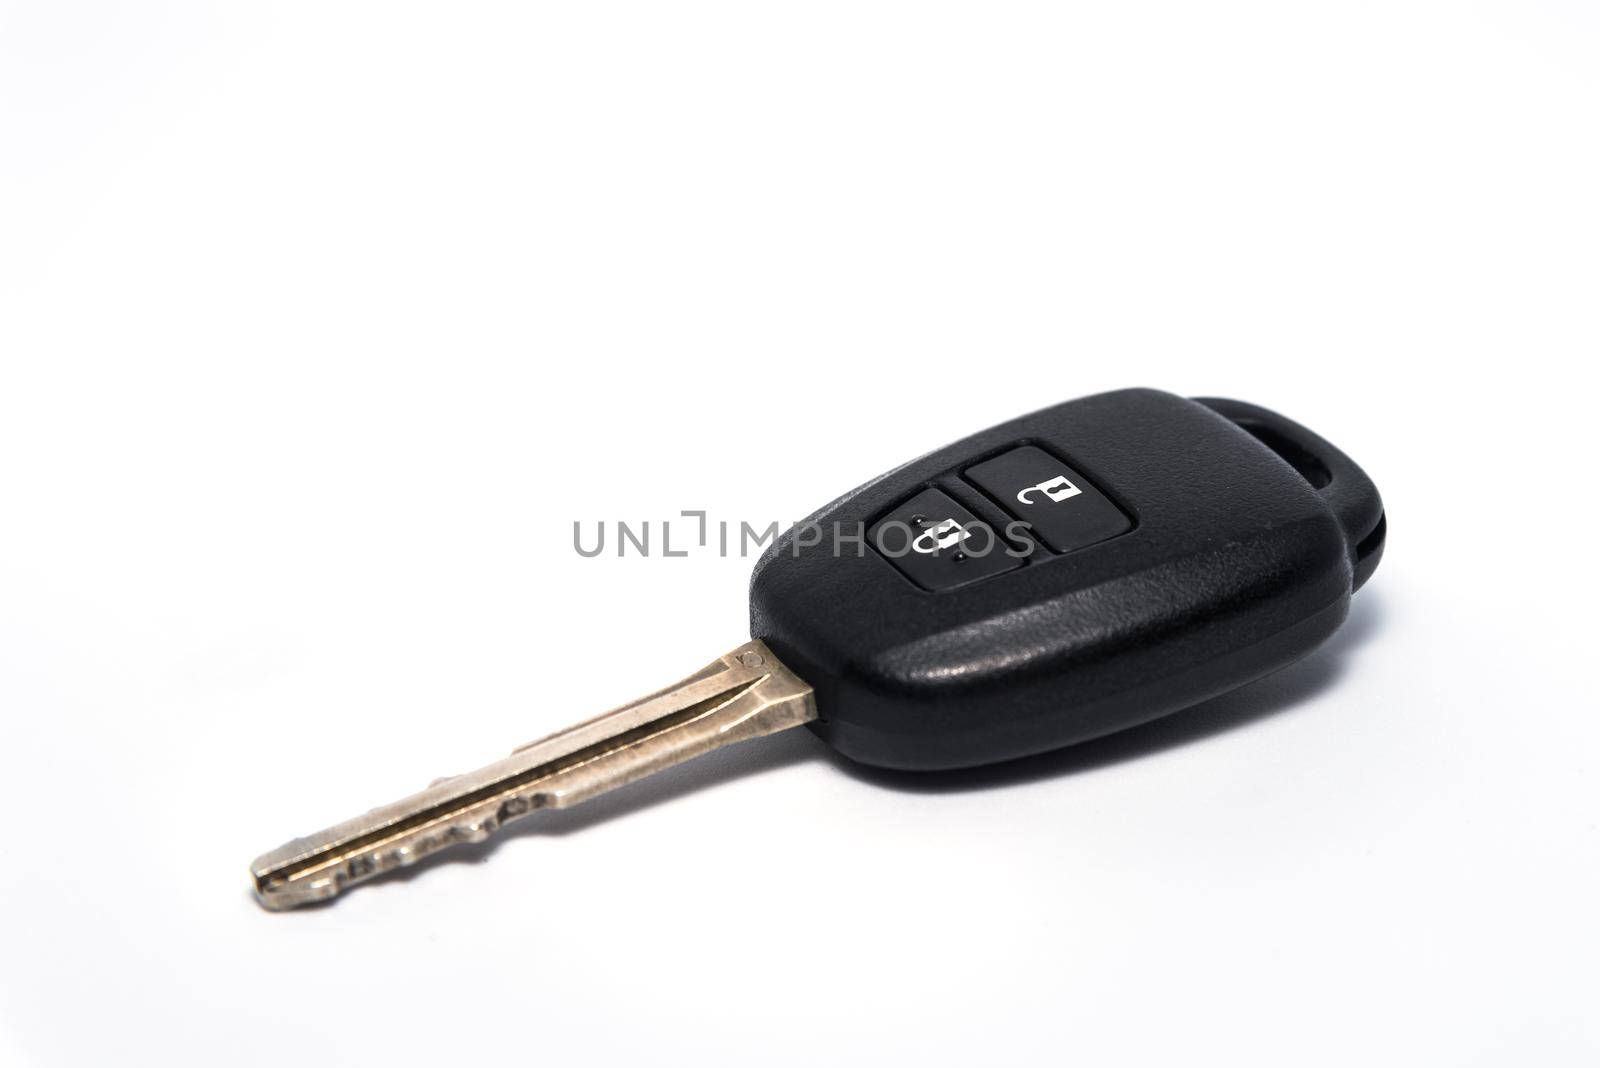 car key isolated on white background by Wmpix